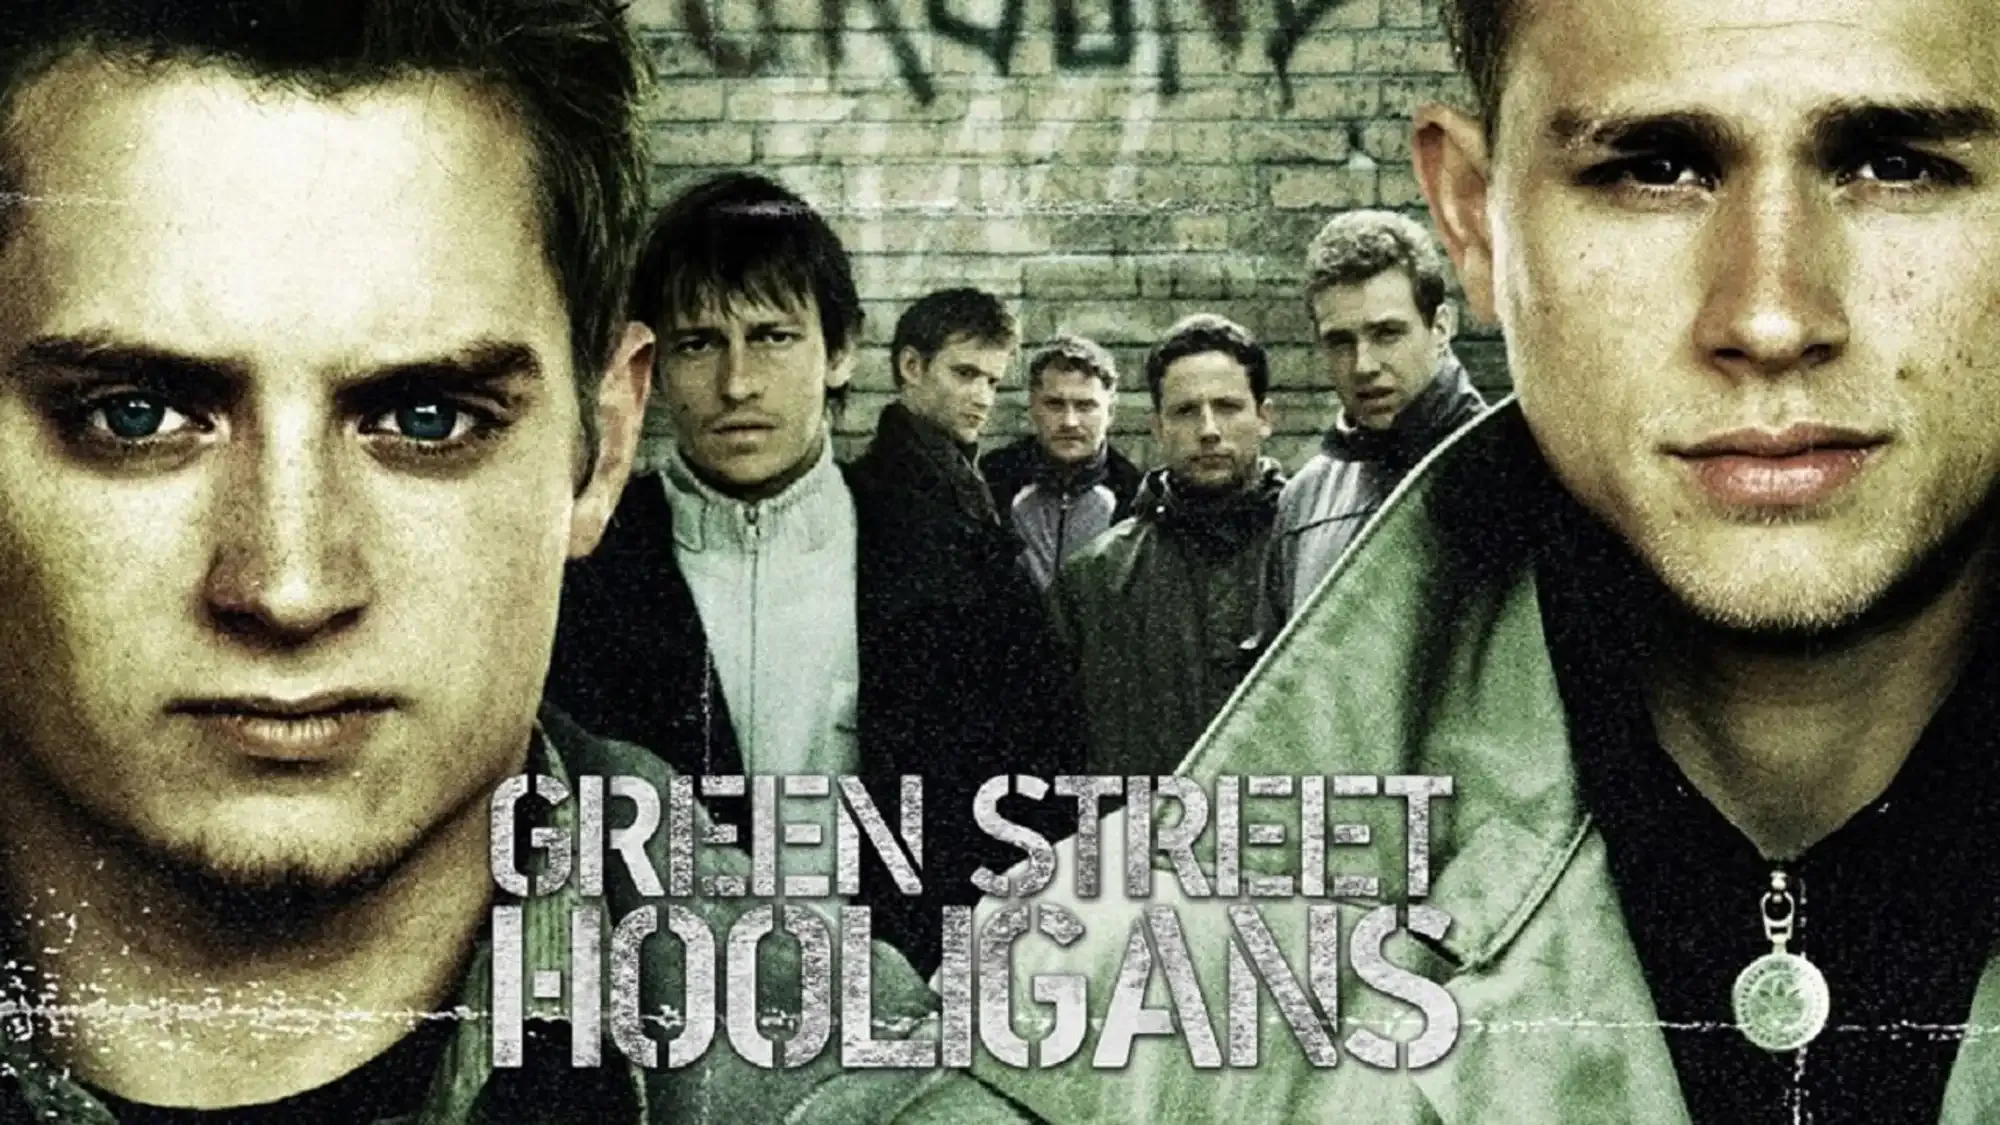 Green Street Hooligans movie review